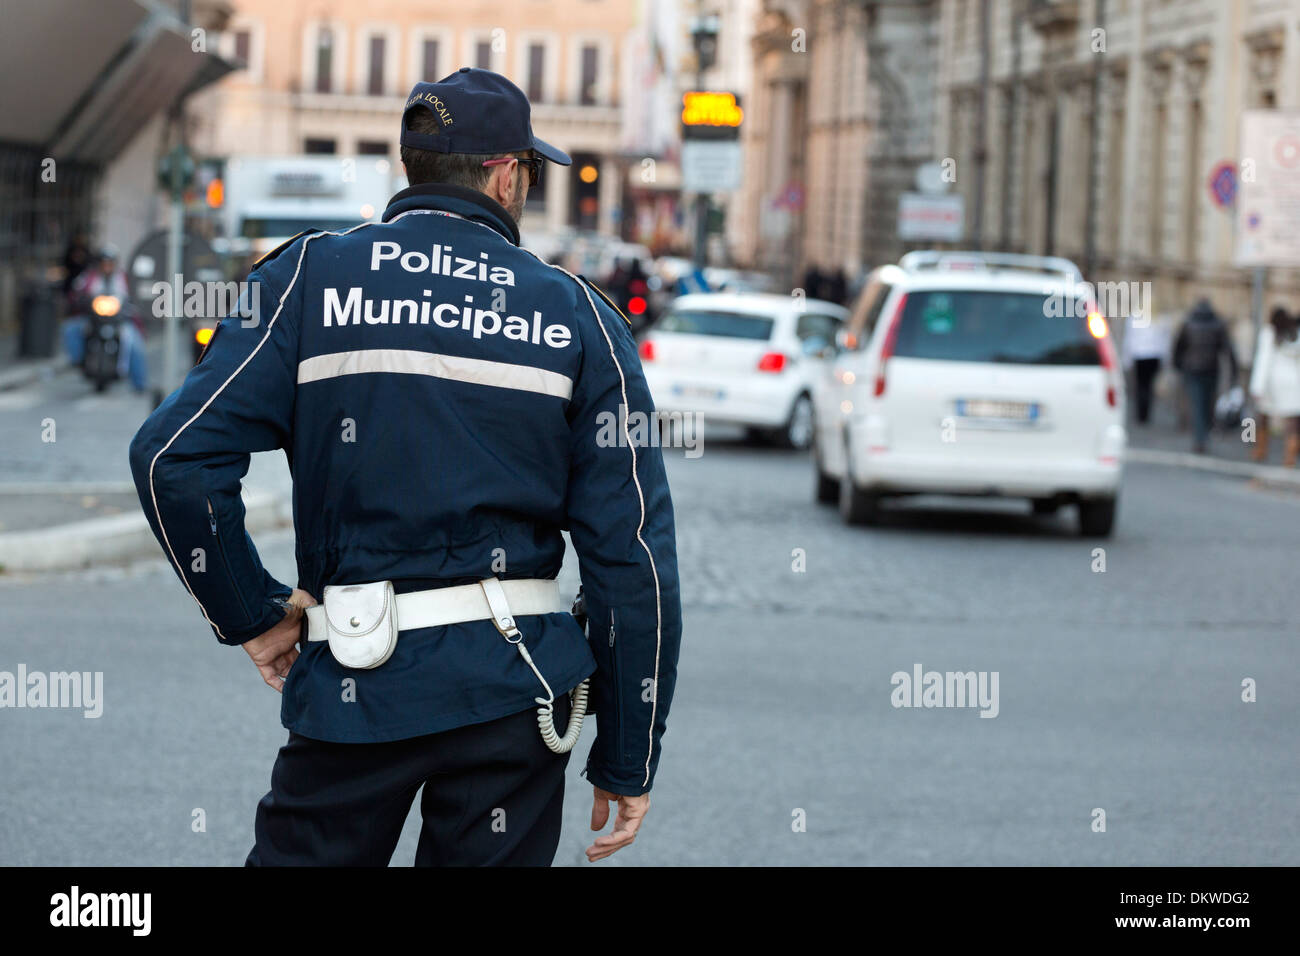 Polizia Municipale, police officer in Rome Stock Photo - Alamy